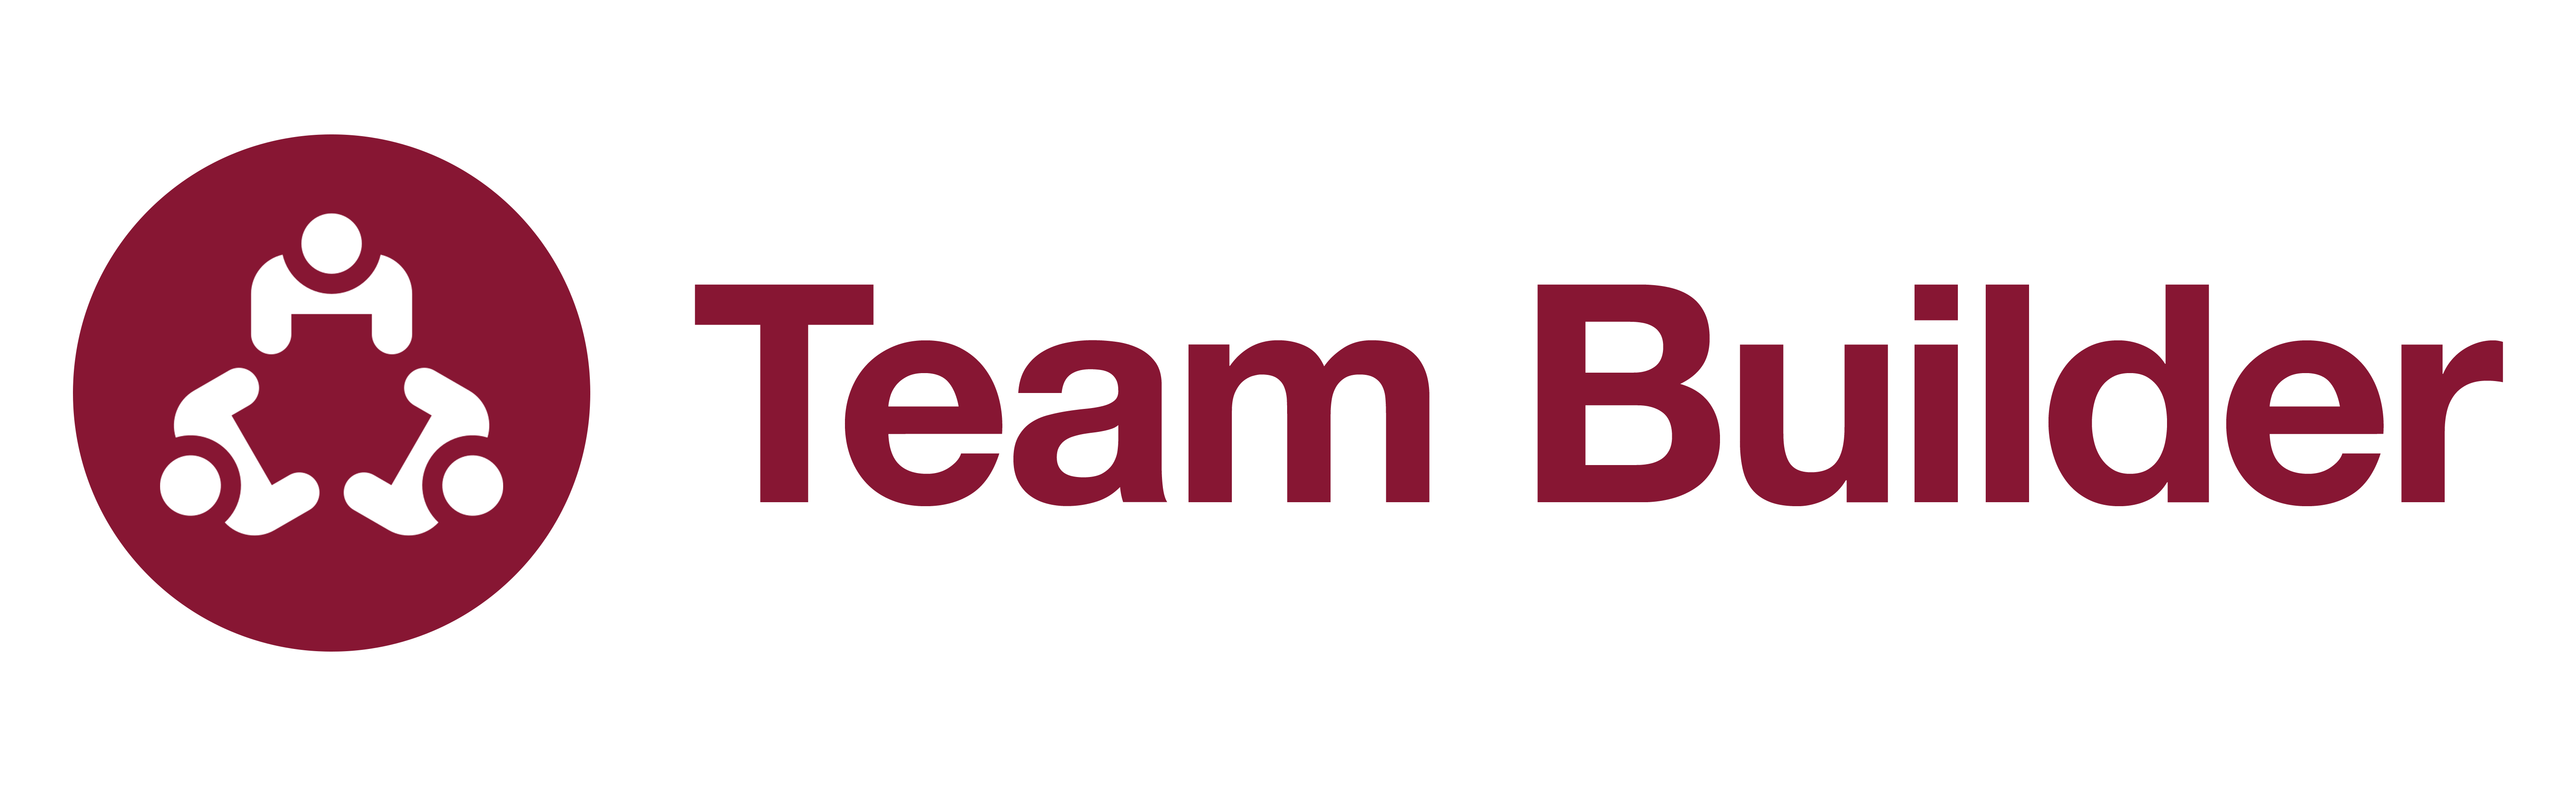 Team Builder Logo